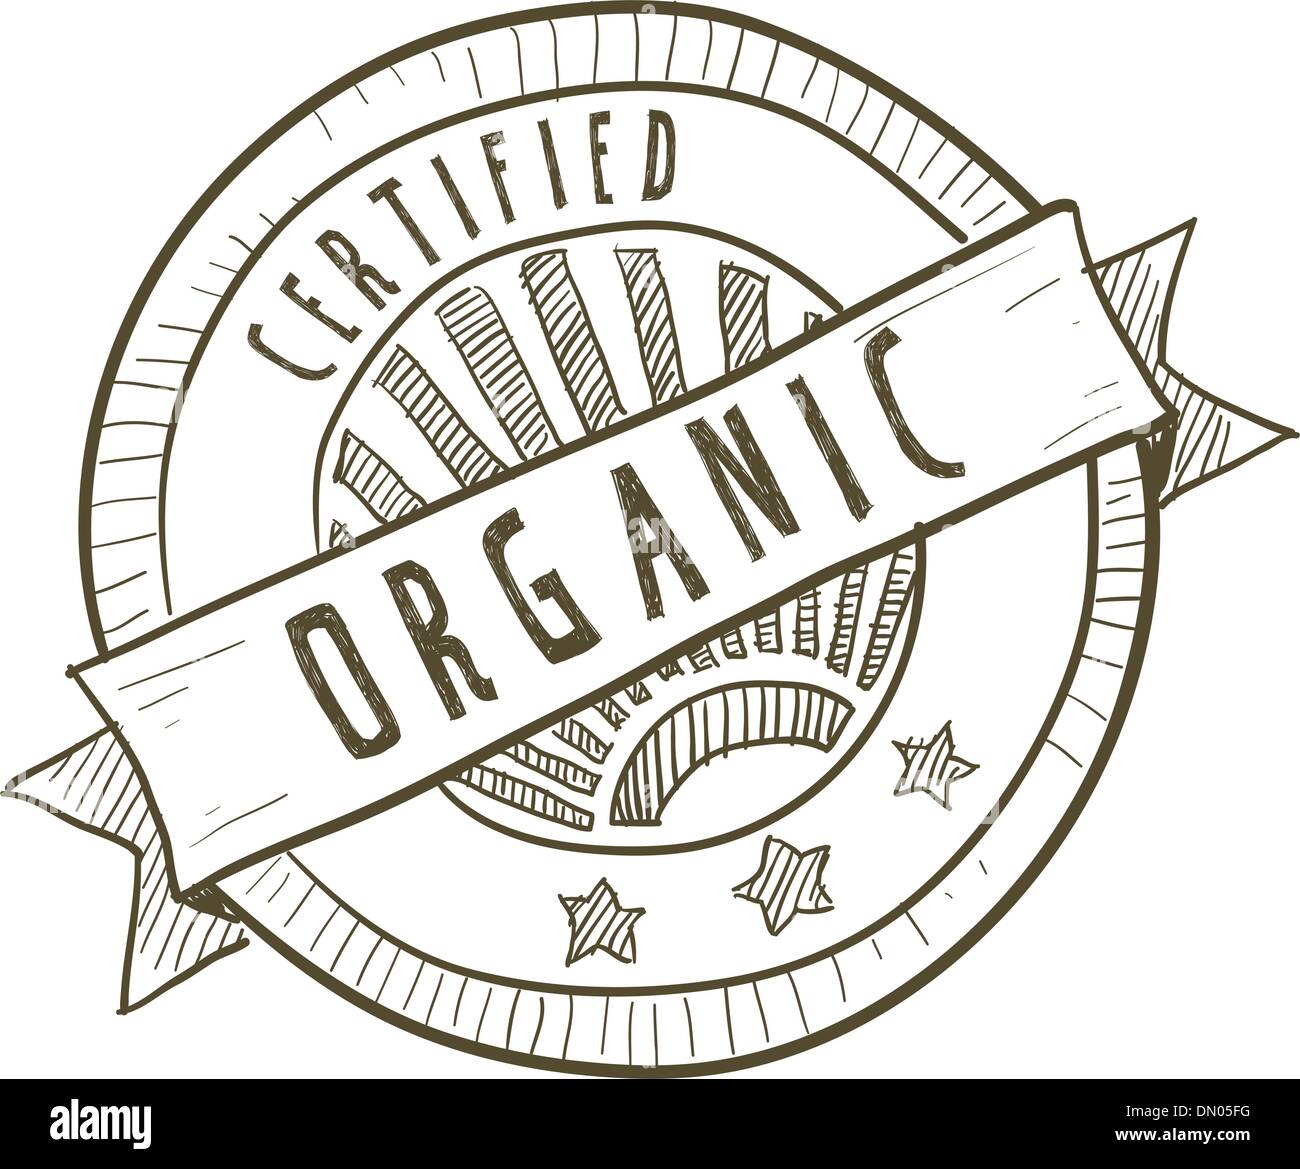 Certified organic food label Stock Vector